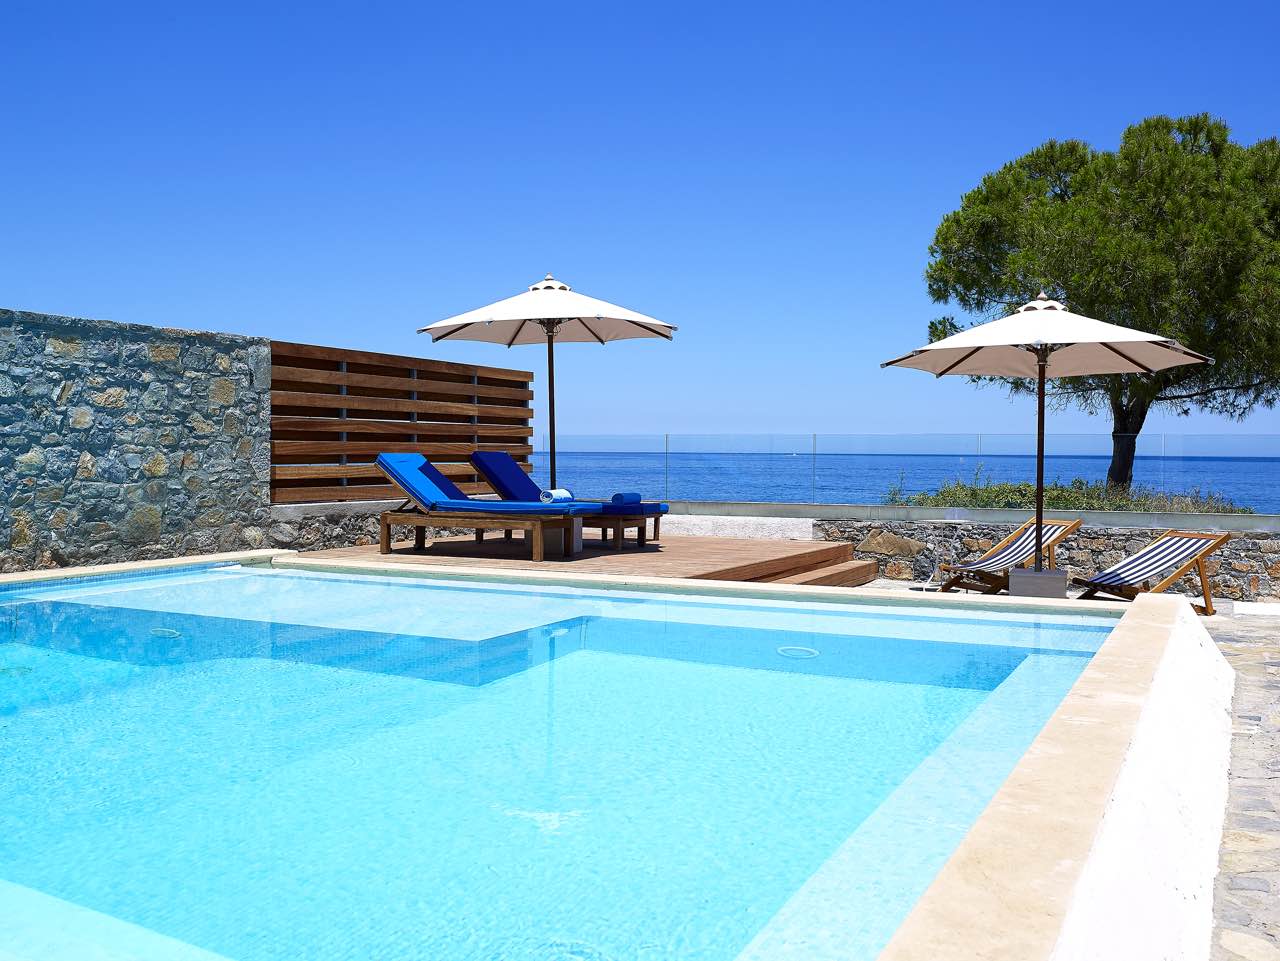 25% Mid Summer Hot Deal At St Nicolas Bay Hotel - Agios Nikolaos - Crete